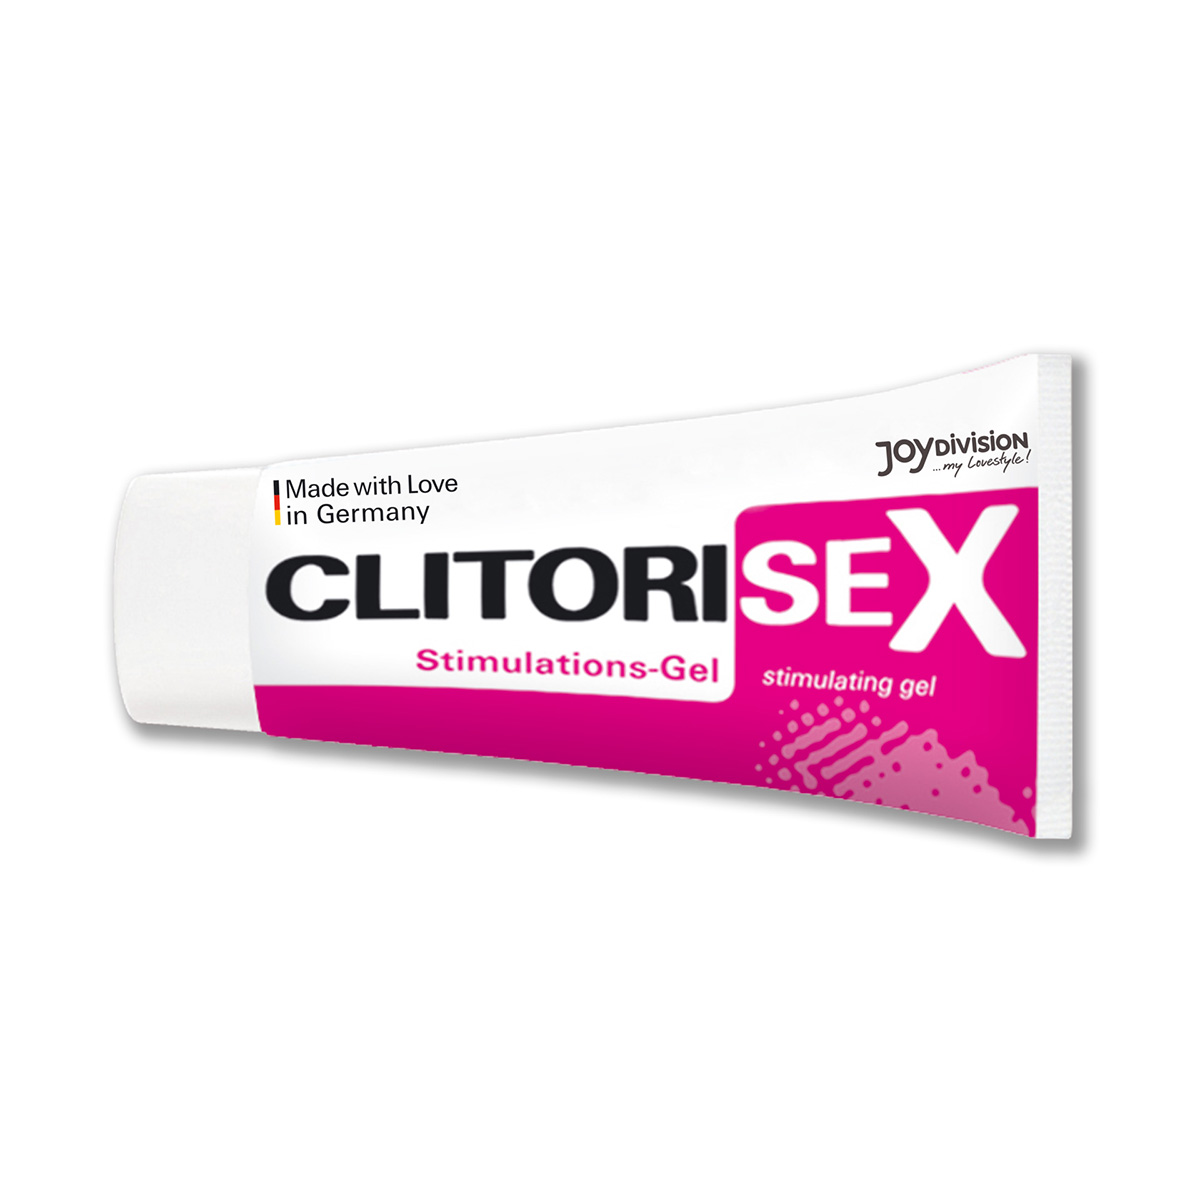 CLITORISEX – Stimulating Gel 25 ml